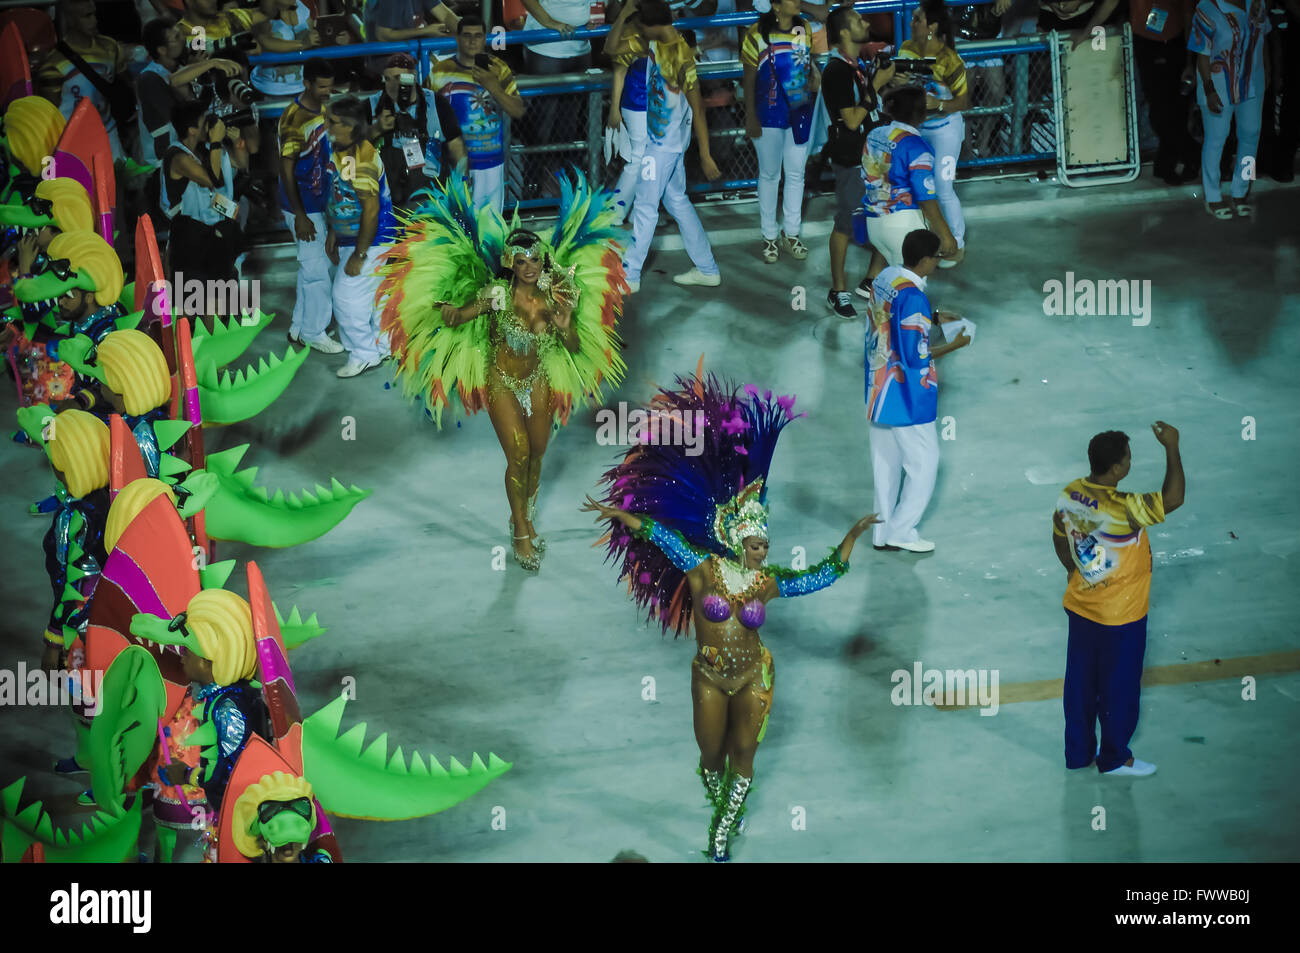 União da Ilha samba school parading at Rio carnival 2016. Queen of the samba school performing. Stock Photo